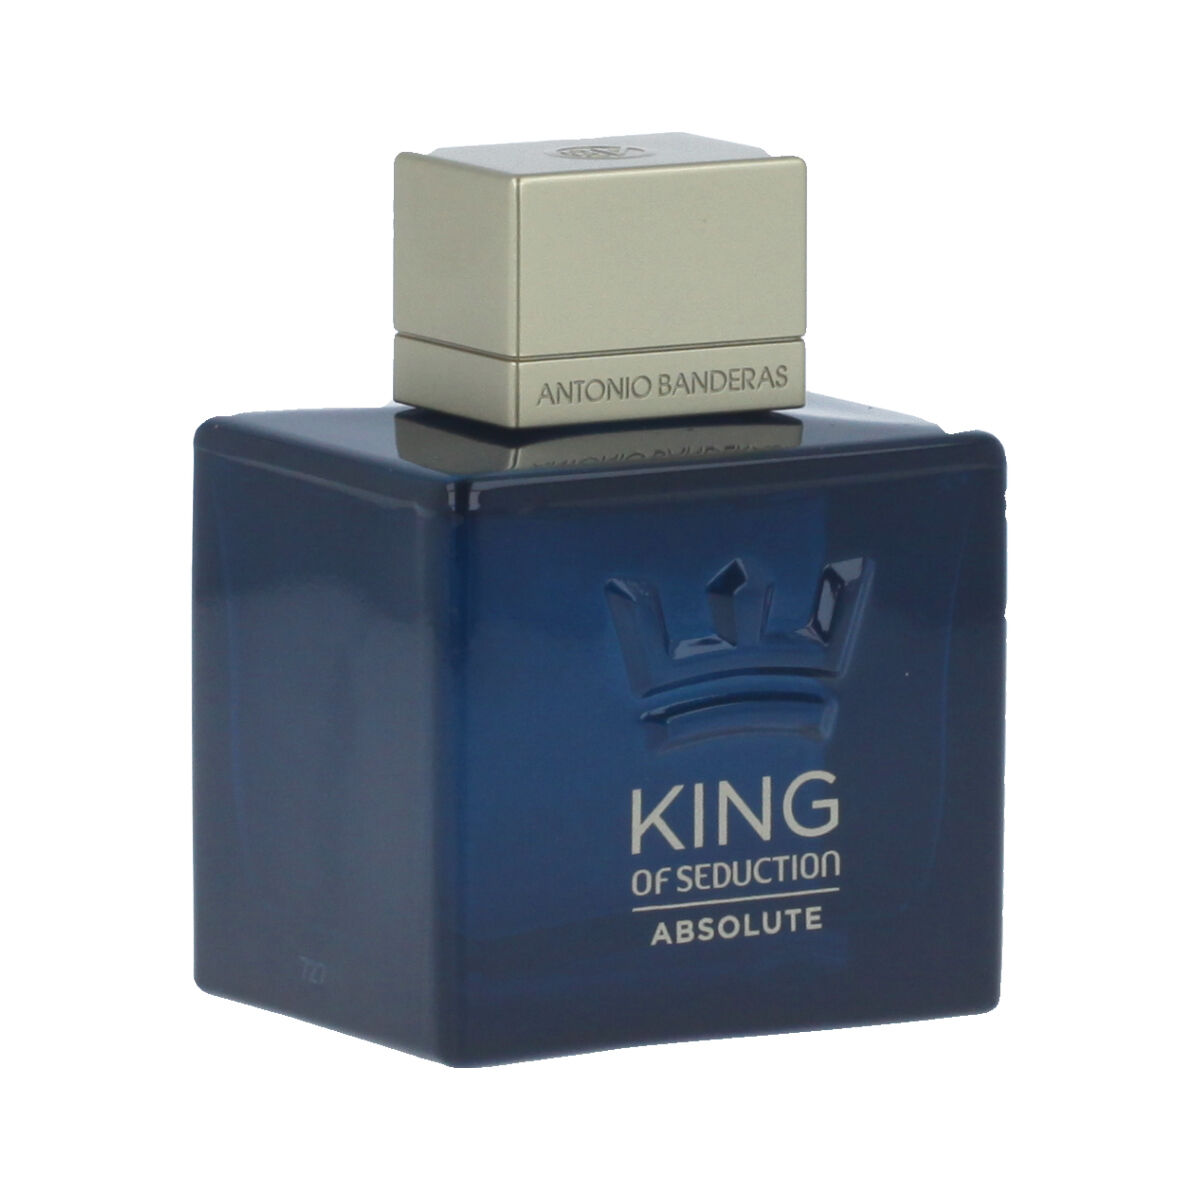 Parfum Homme Antonio Banderas EDT King of Seduction Absolute 100 ml